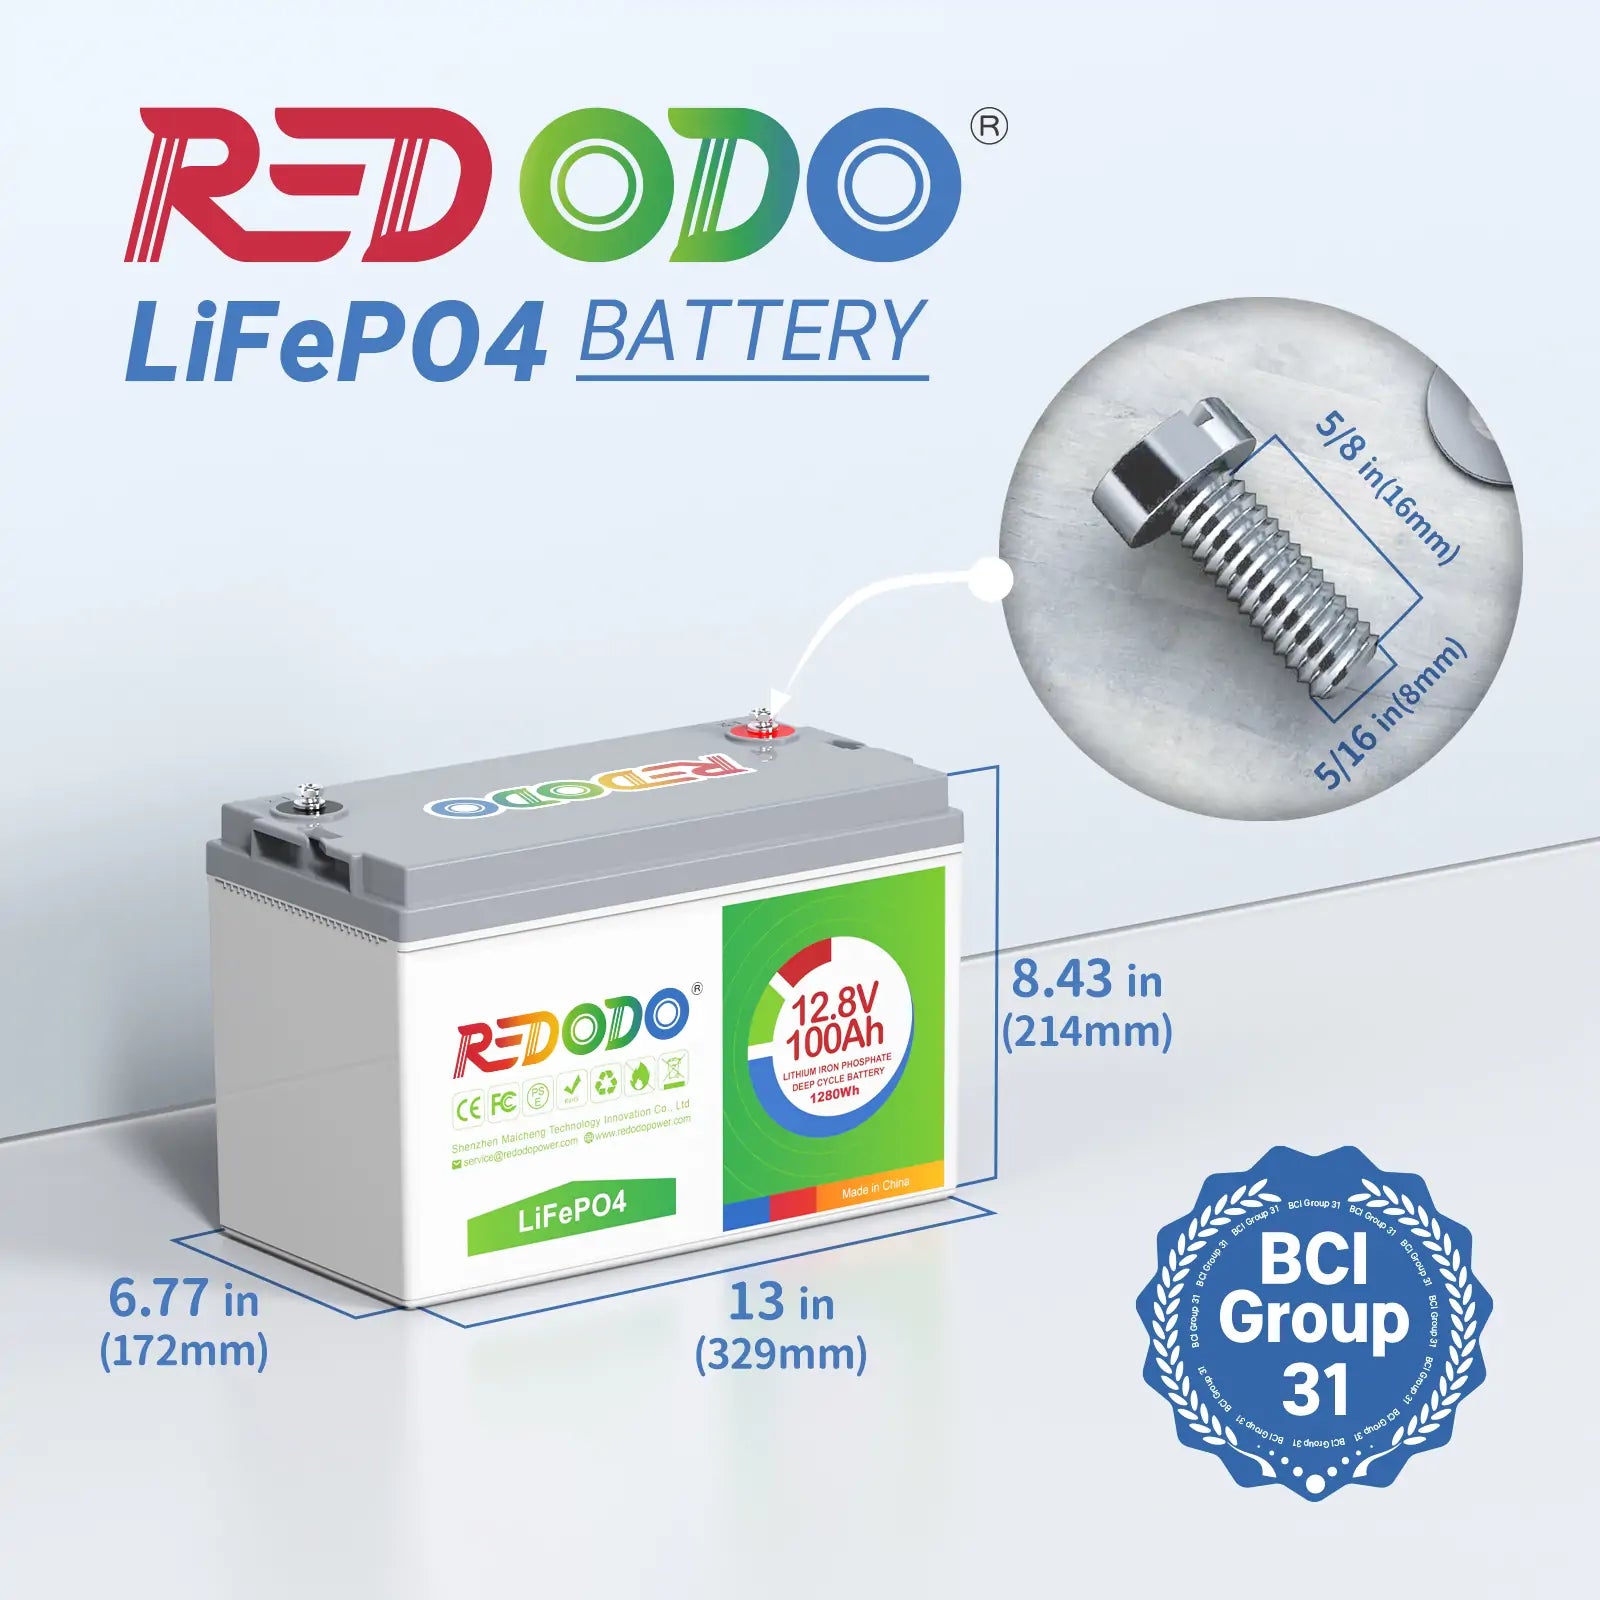 Redodo 12V 100Ah LiFePO4 battery | 1.28kWh & 1.28kW Redodo